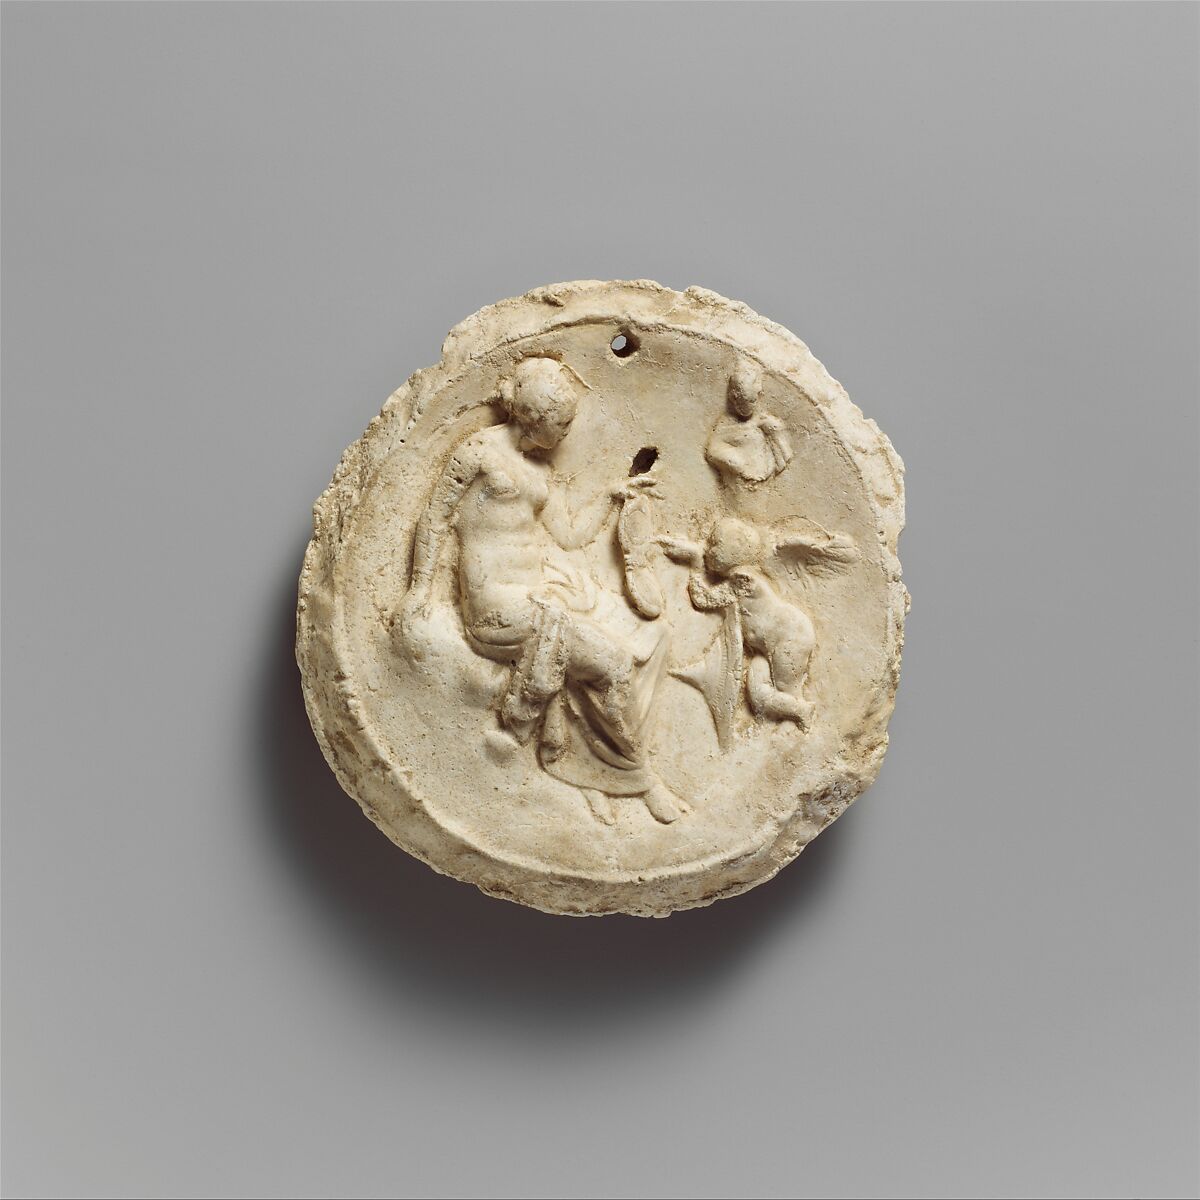 Emblema with Aphrodite and Eros, Plaster, Mediterranean